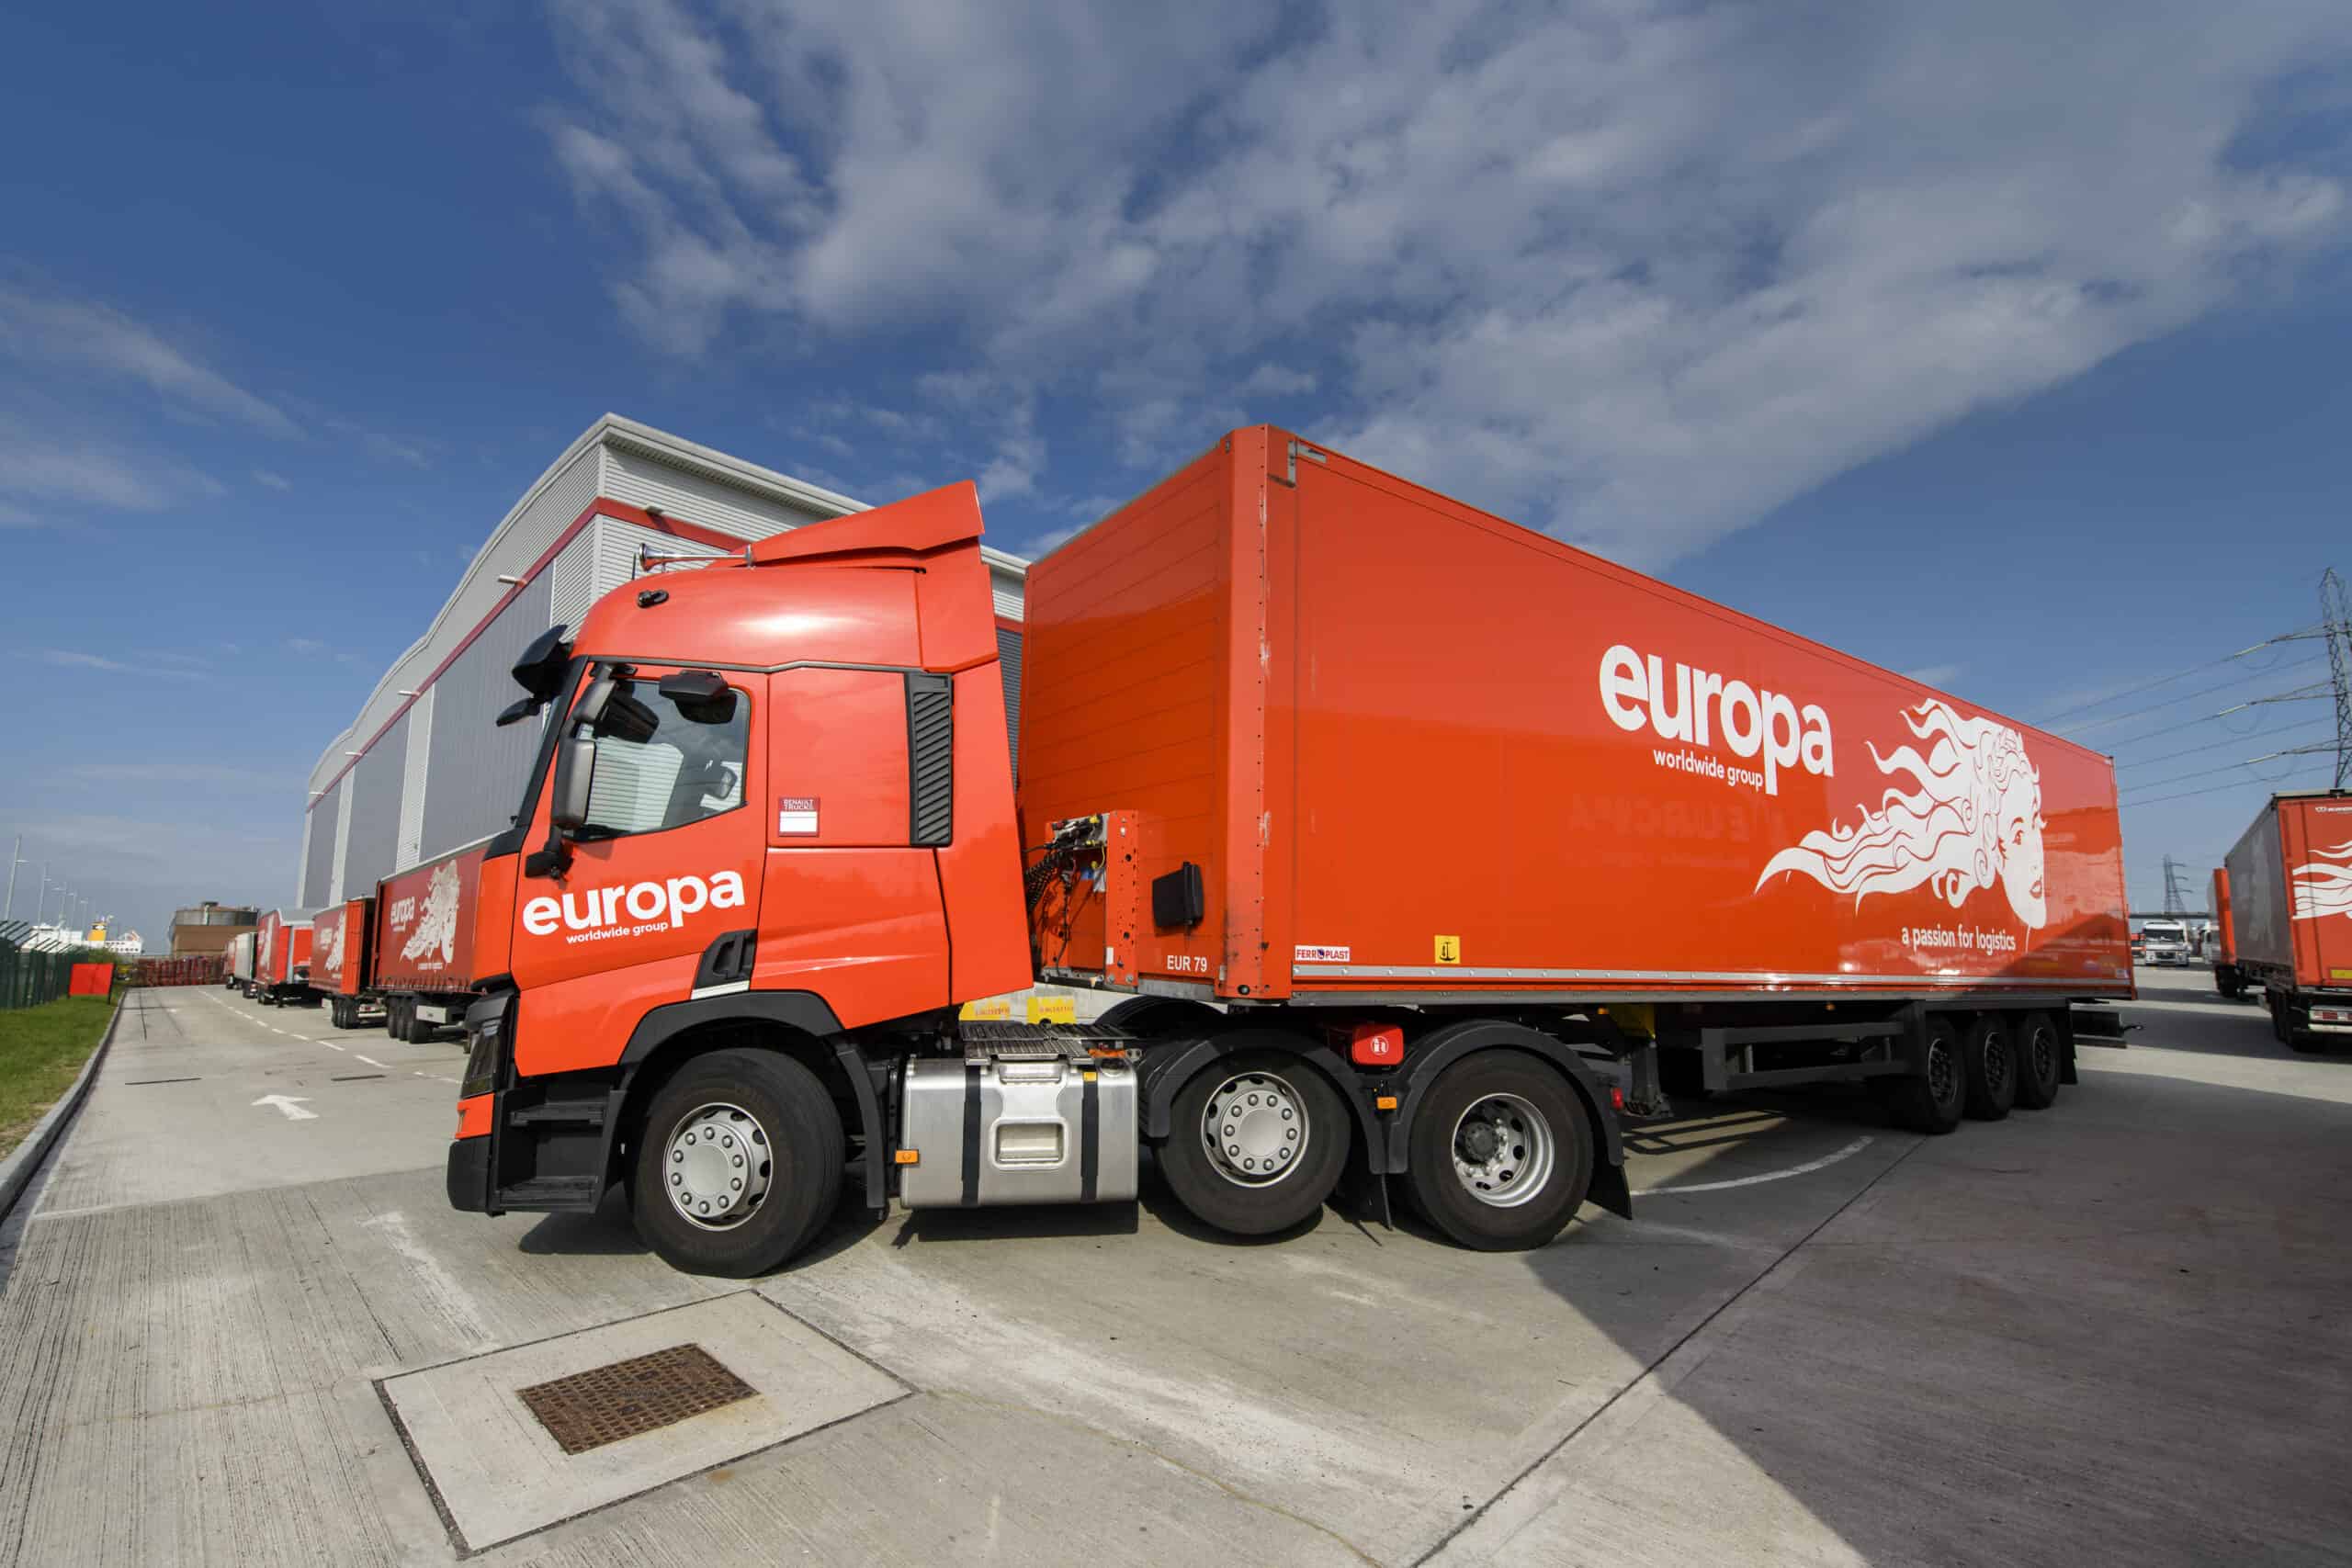 Europa Belgium Truck